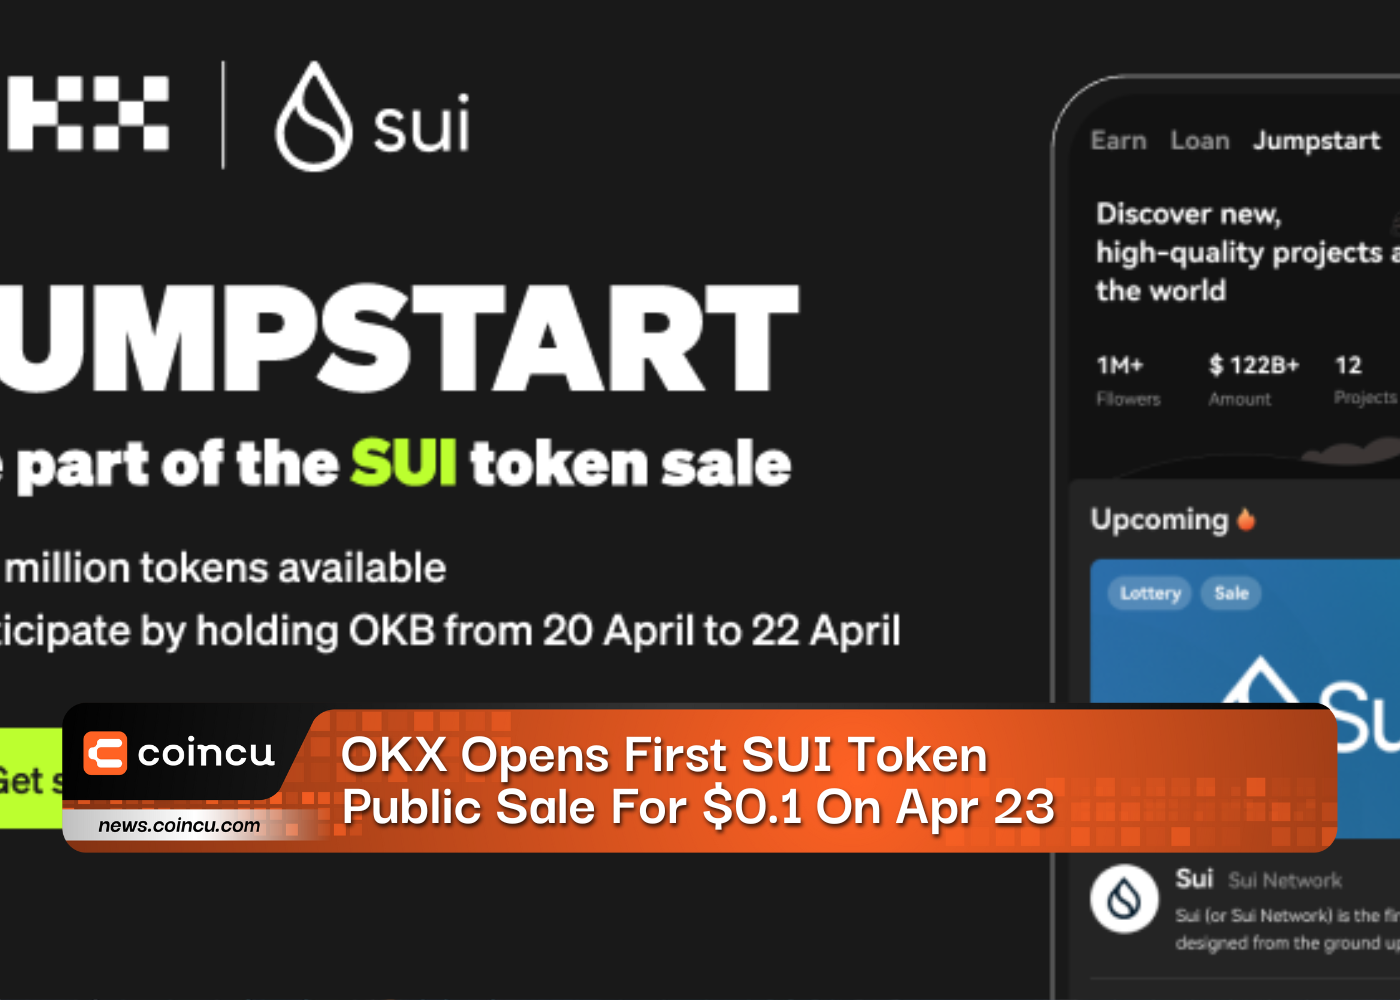 OKX Opens First SUI Token Public Sale For $0.1 On Apr 23